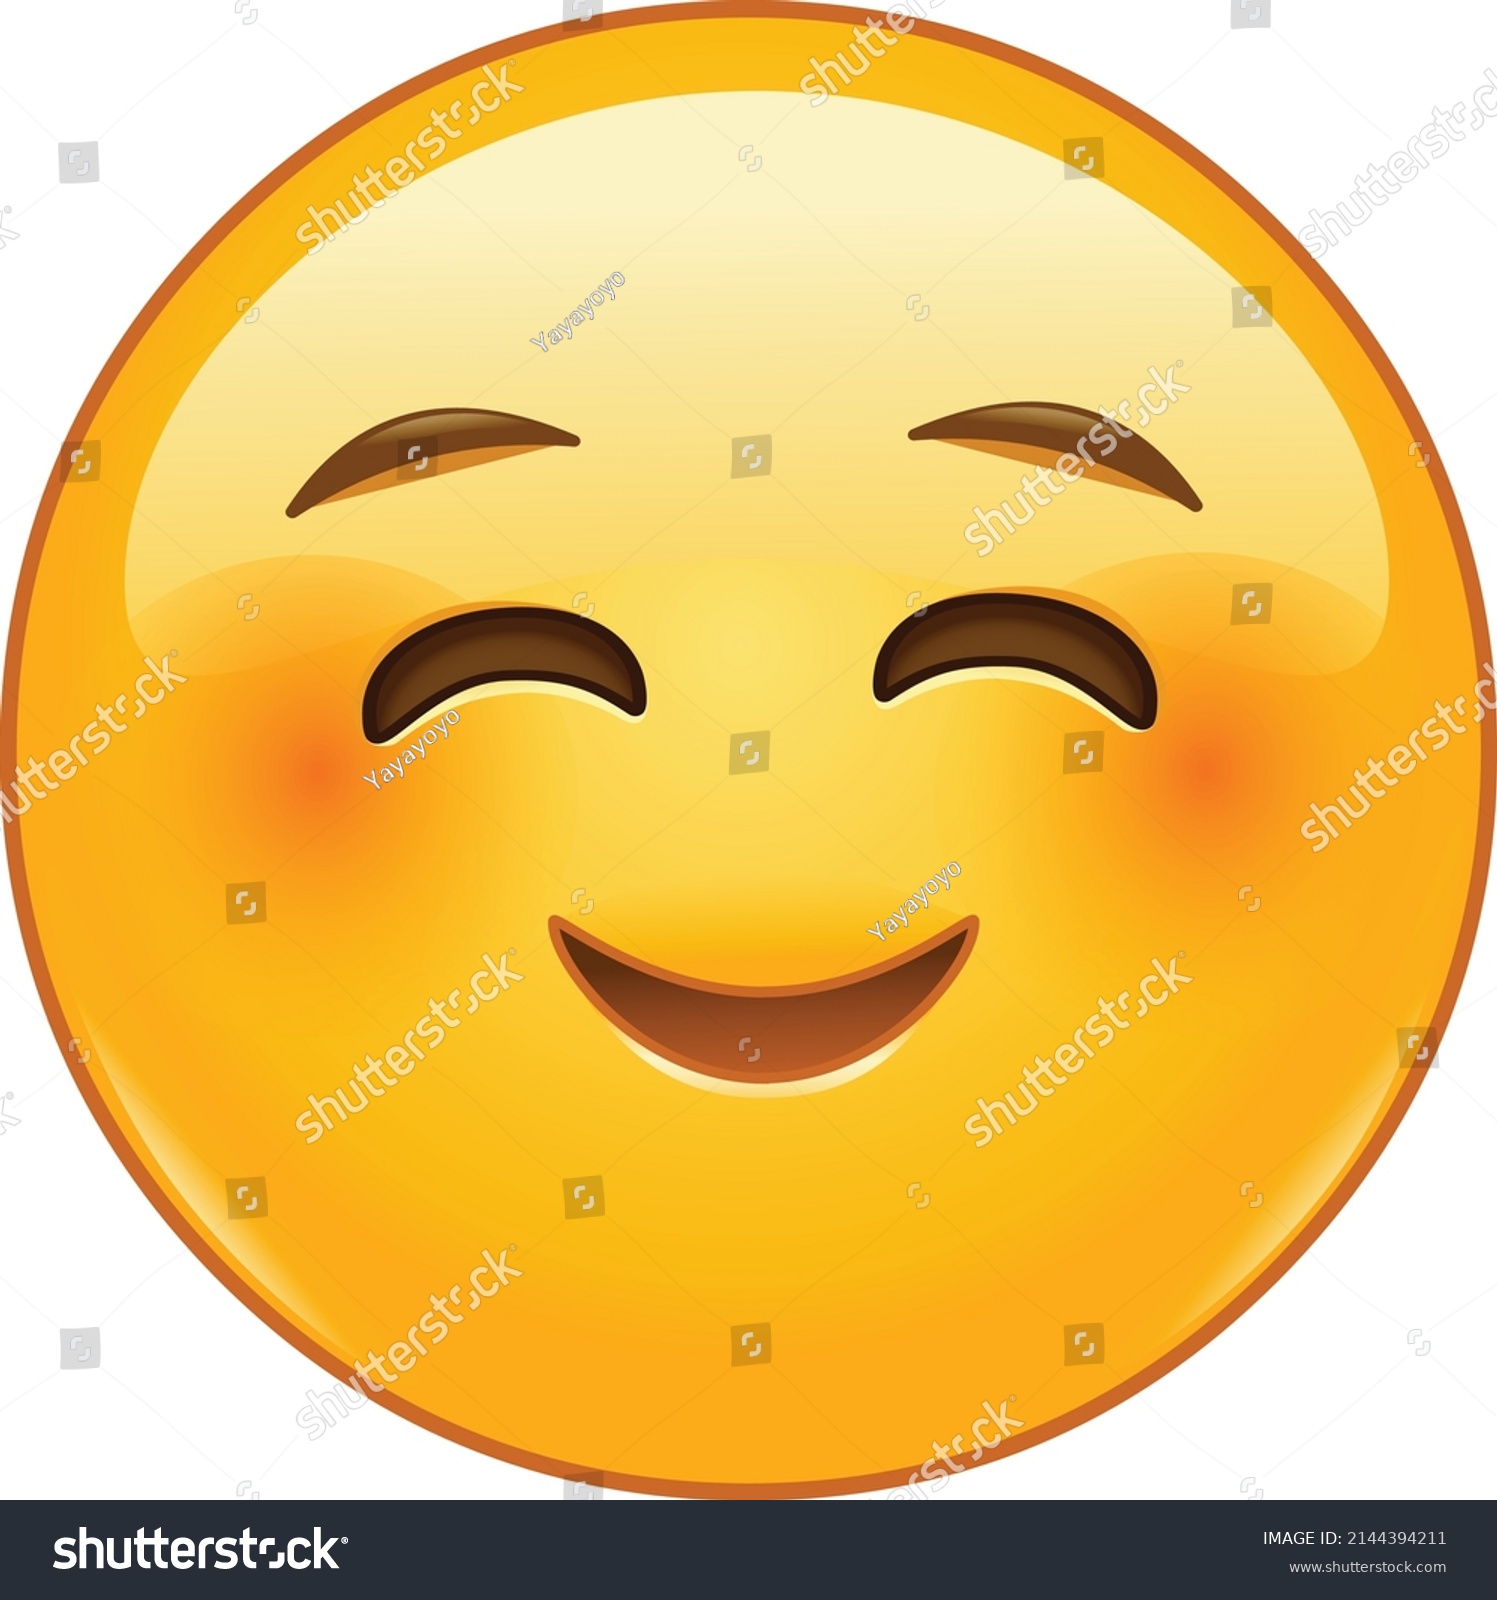 Happy Emoji Emoticon Blushing Smiling Eyes Stock Vector Royalty Free 2144394211 